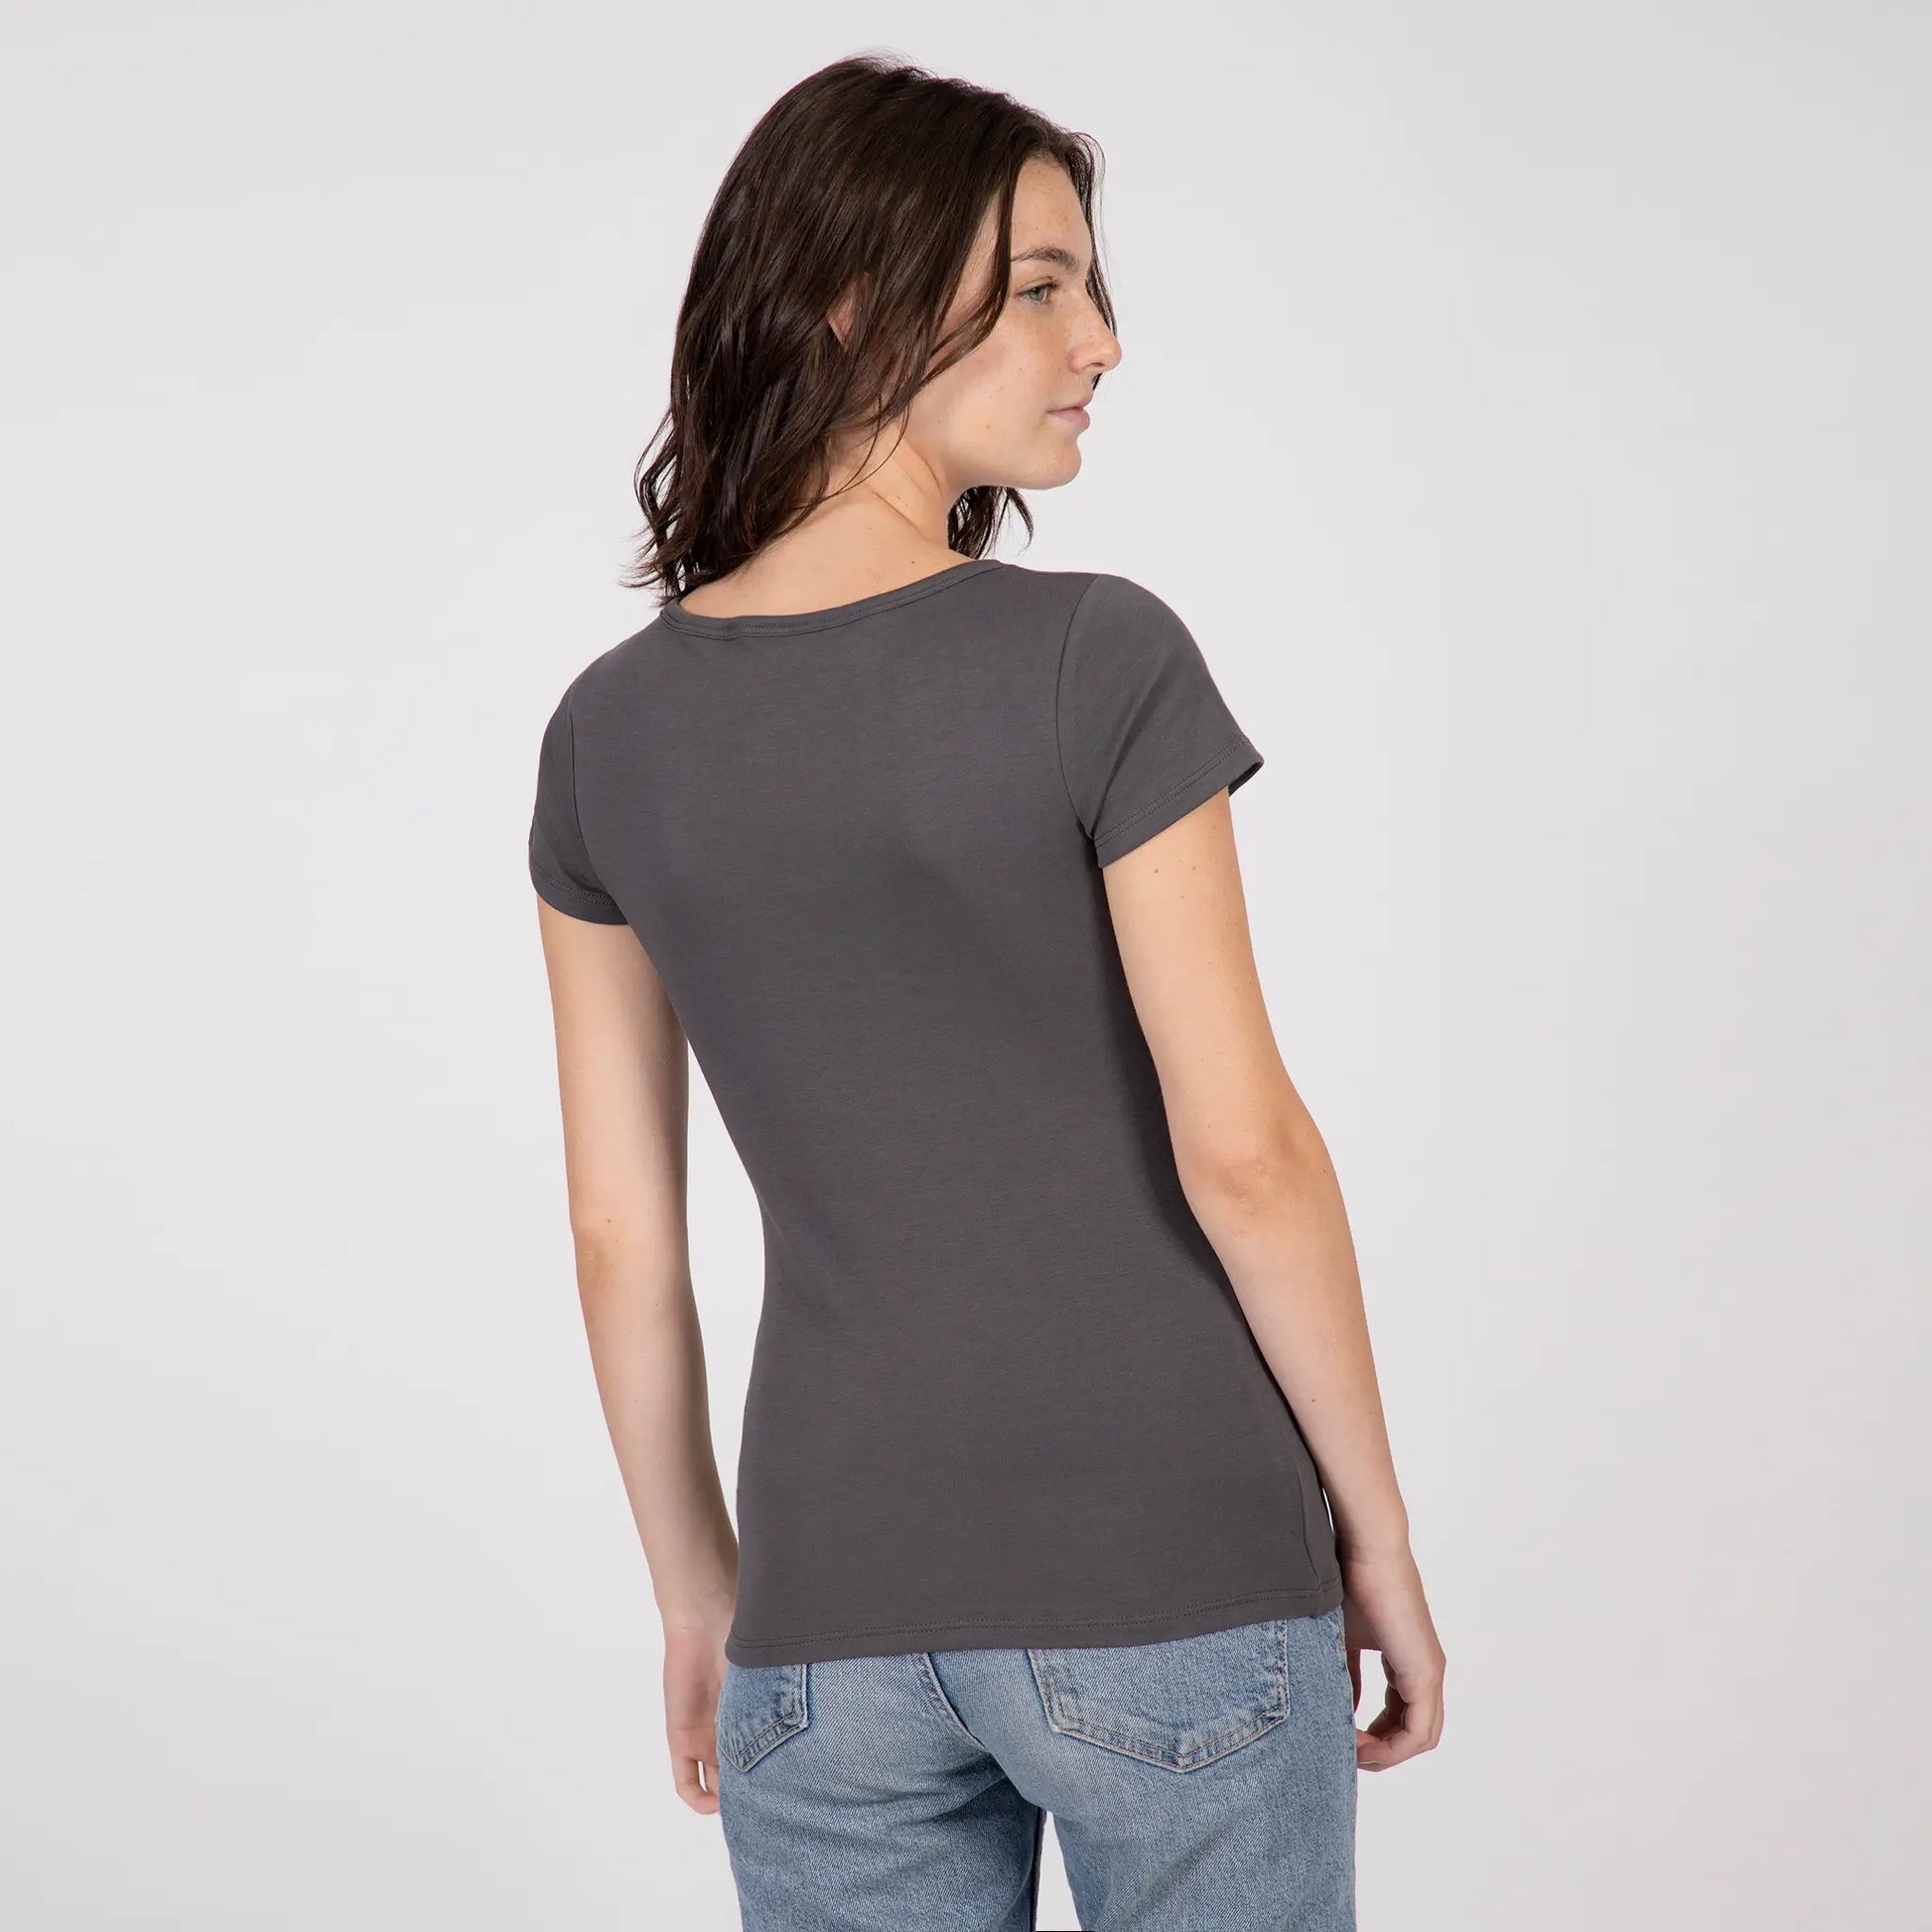 womens 100 cotton tshirt crew neck color gray